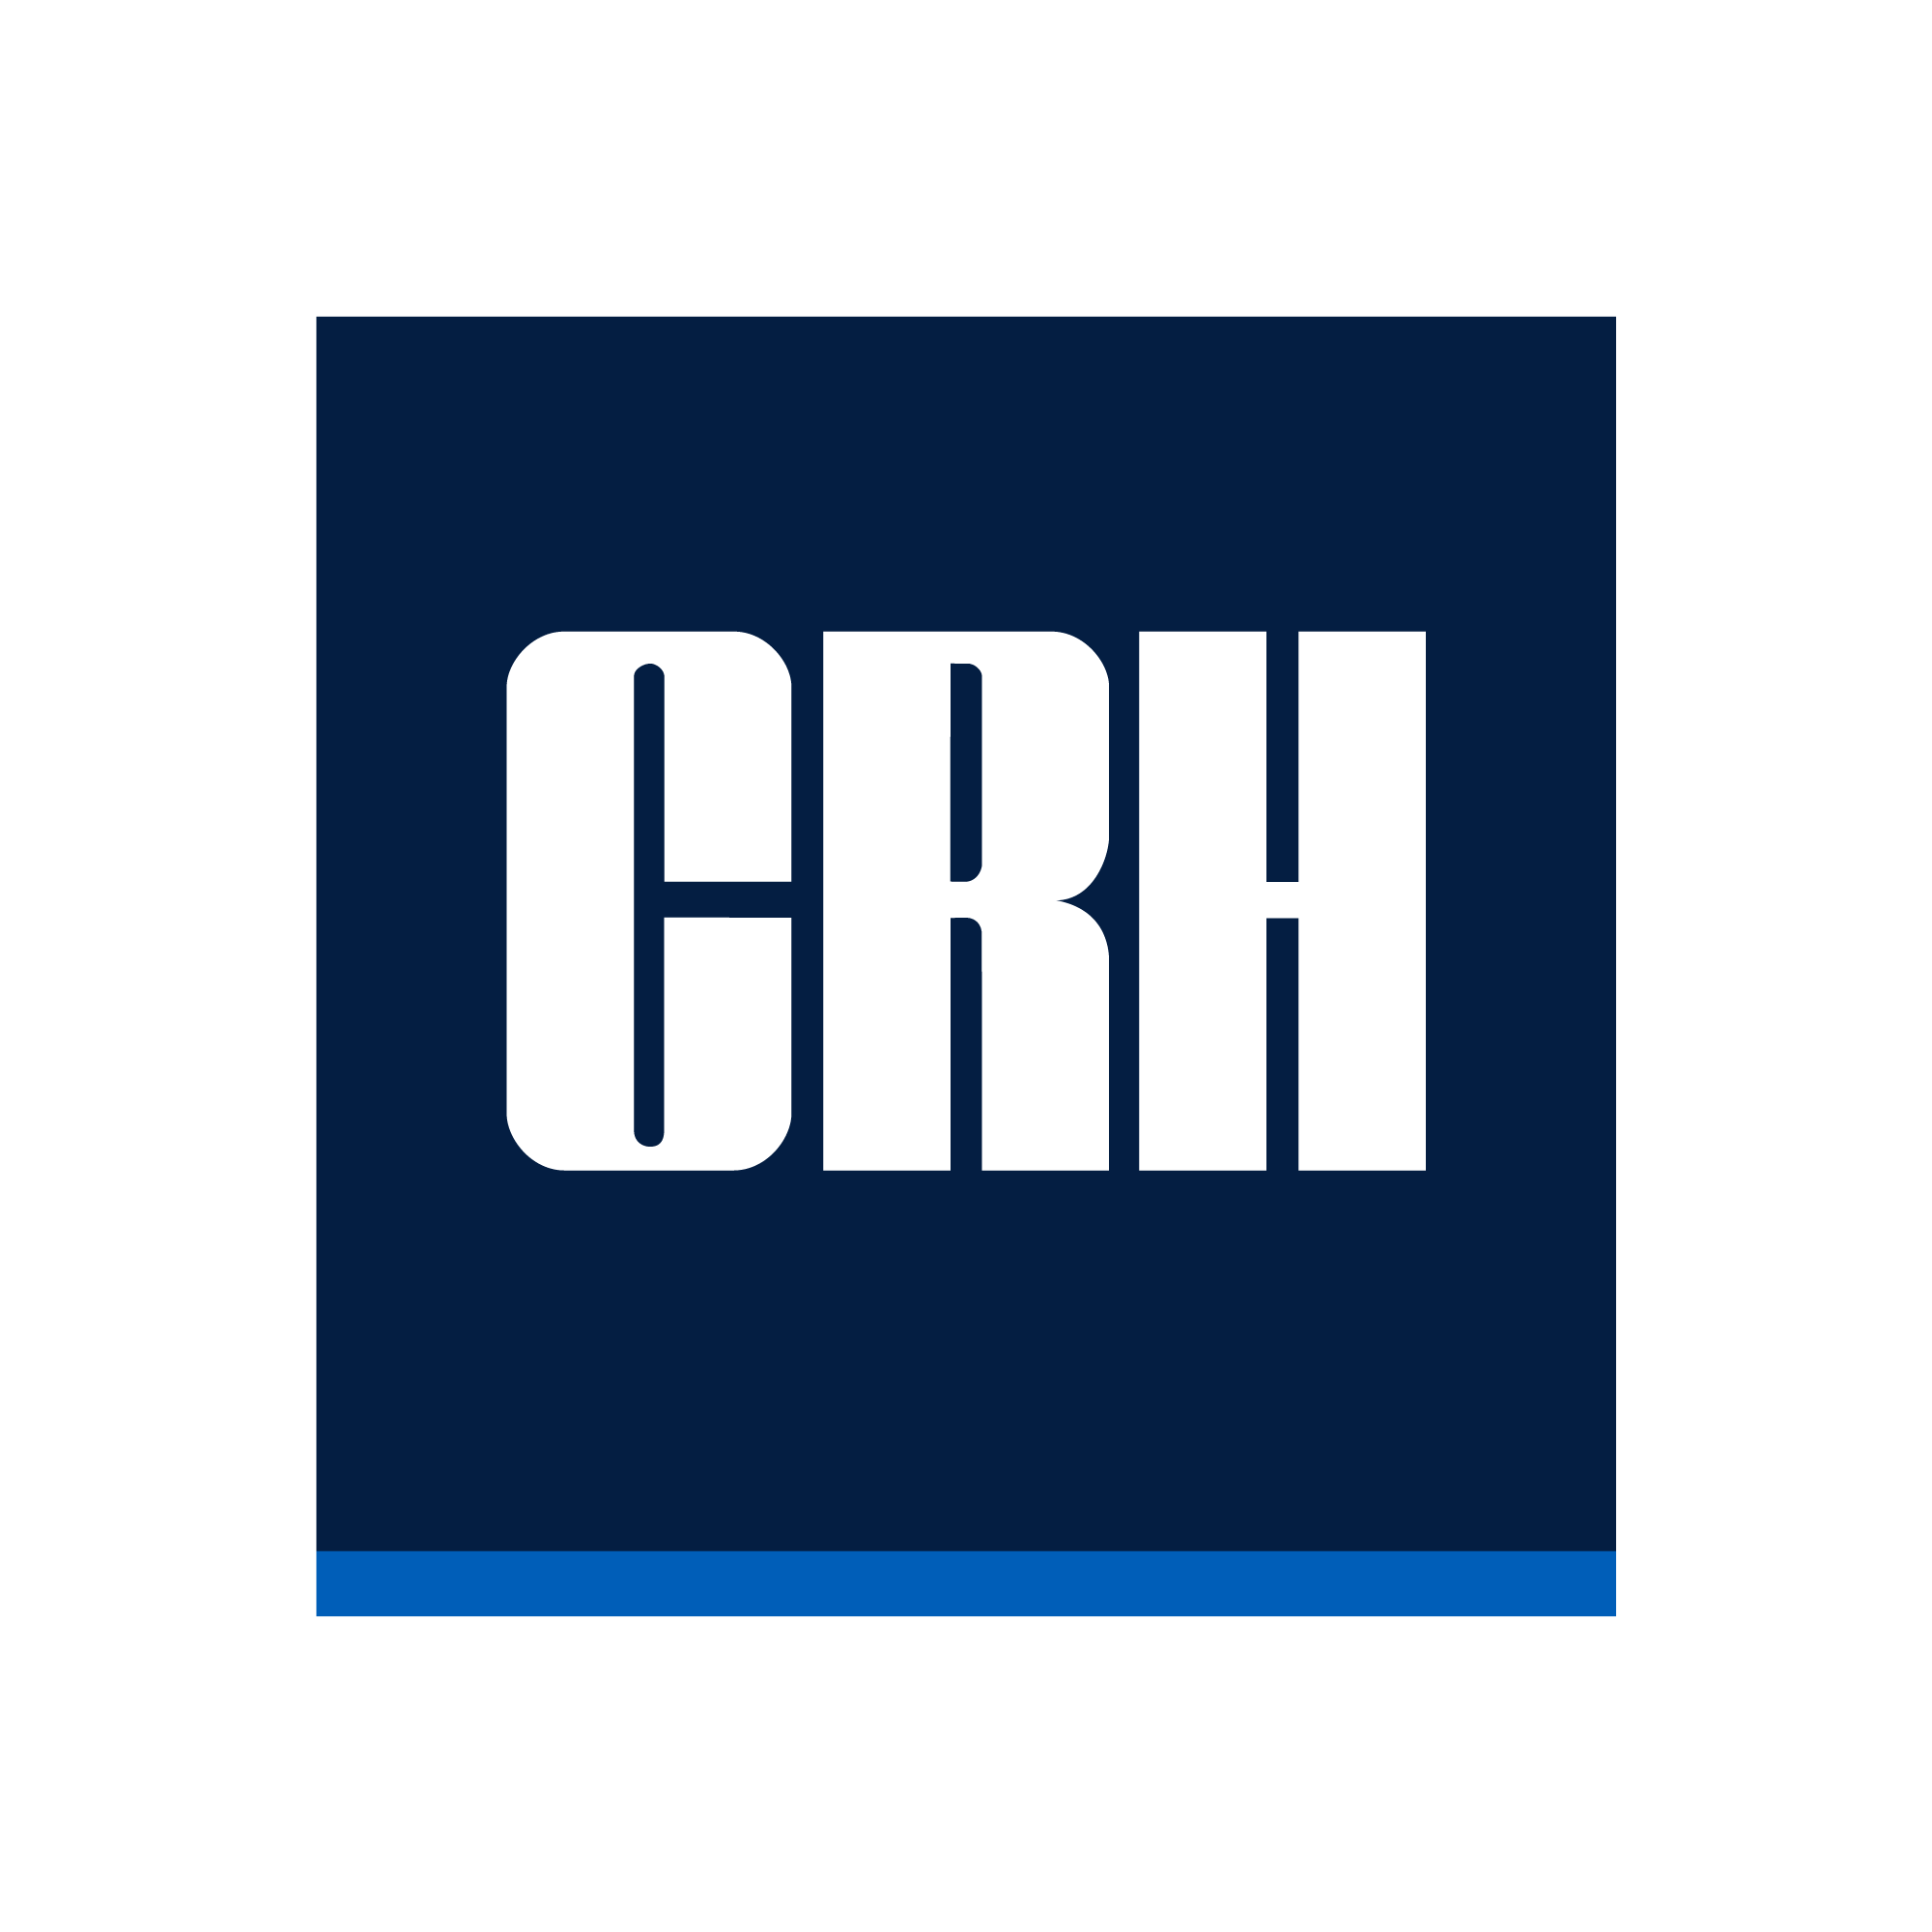 Crh logo